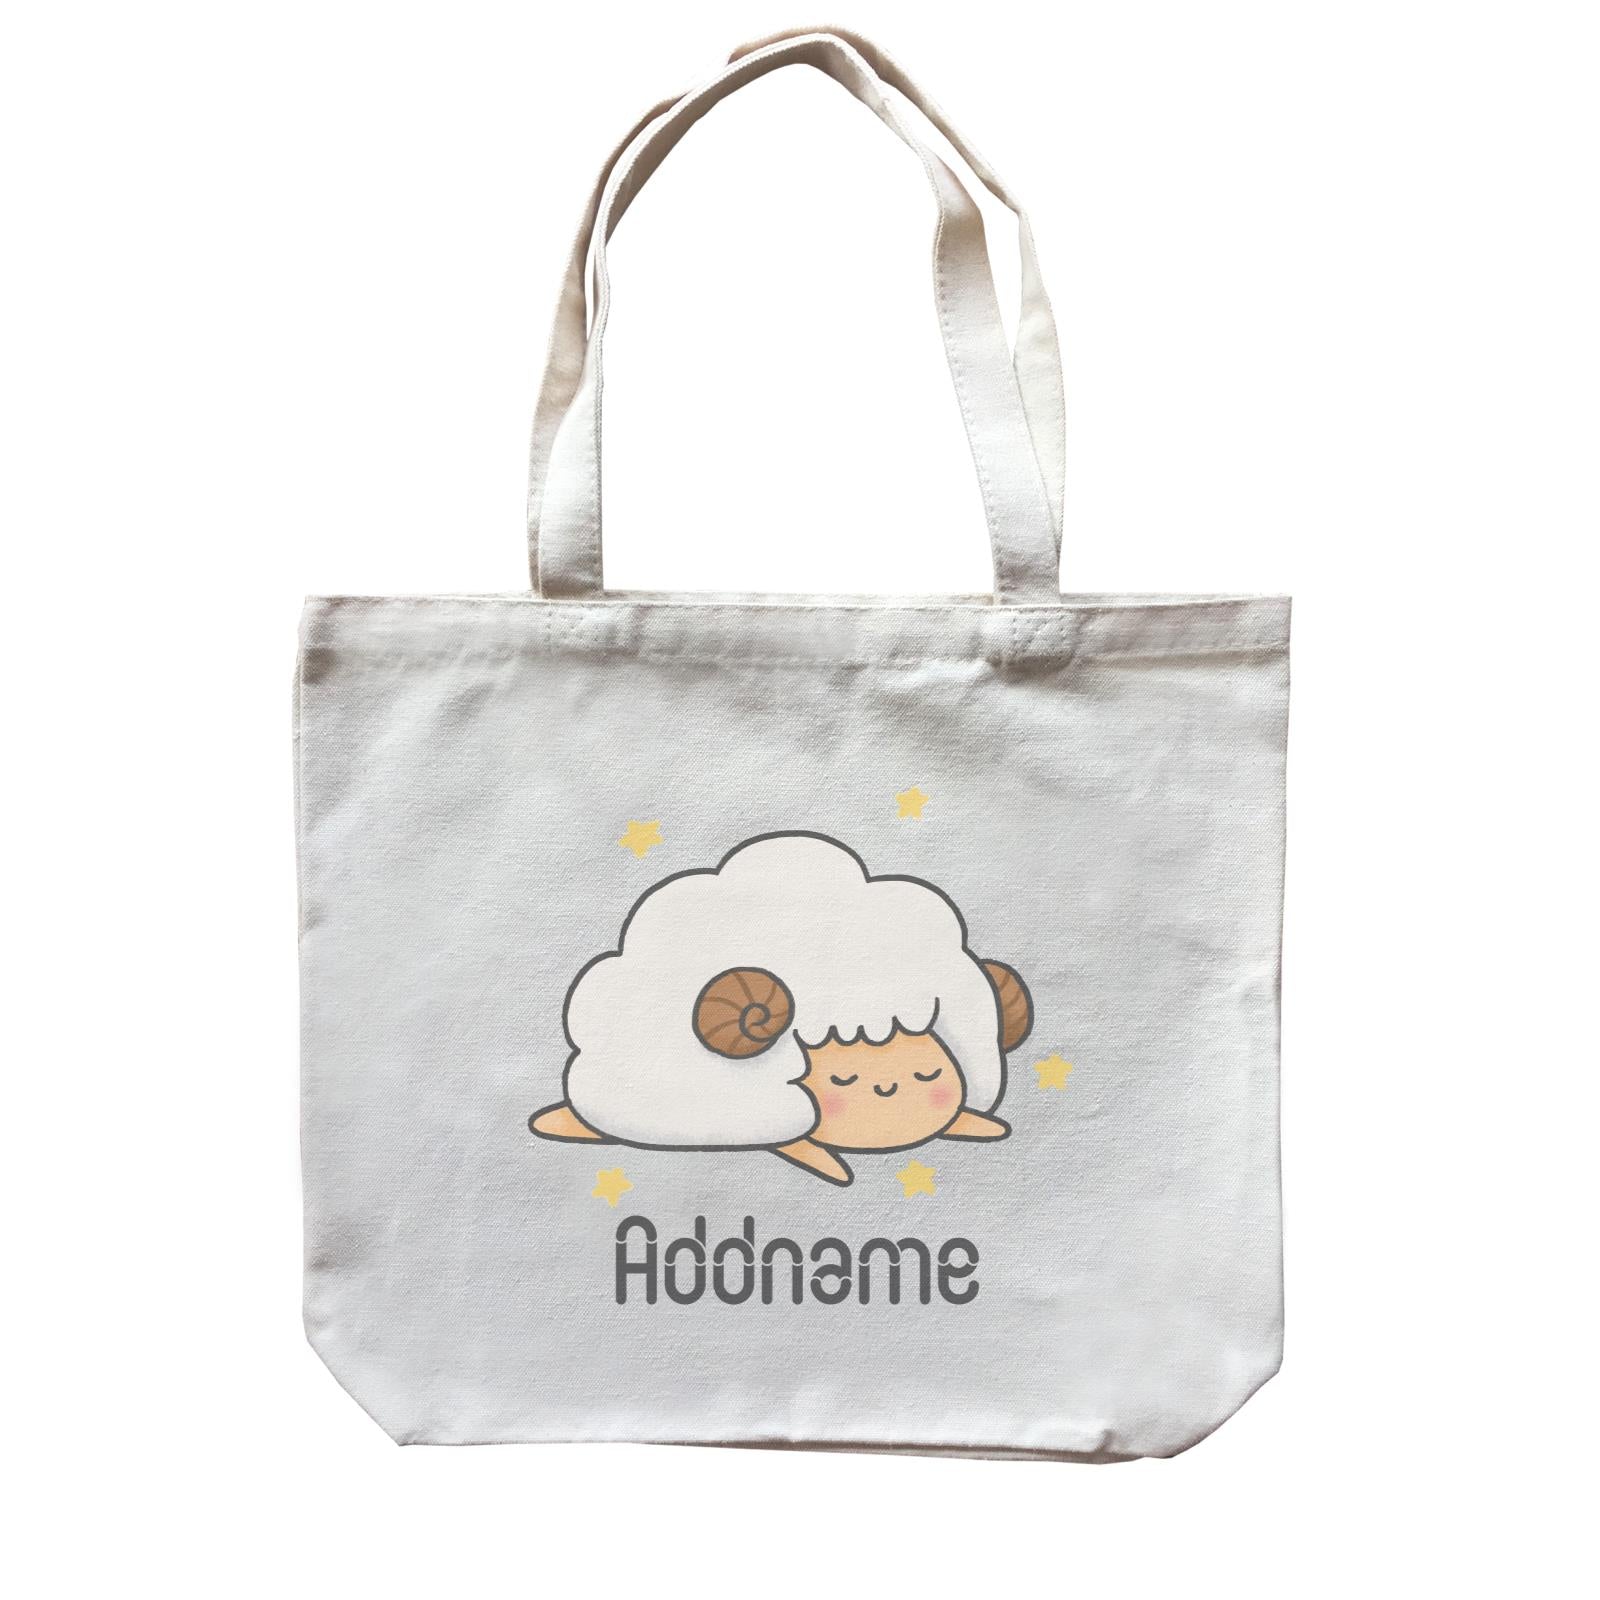 Cute Hand Drawn Style Sheep Addname Canvas Bag